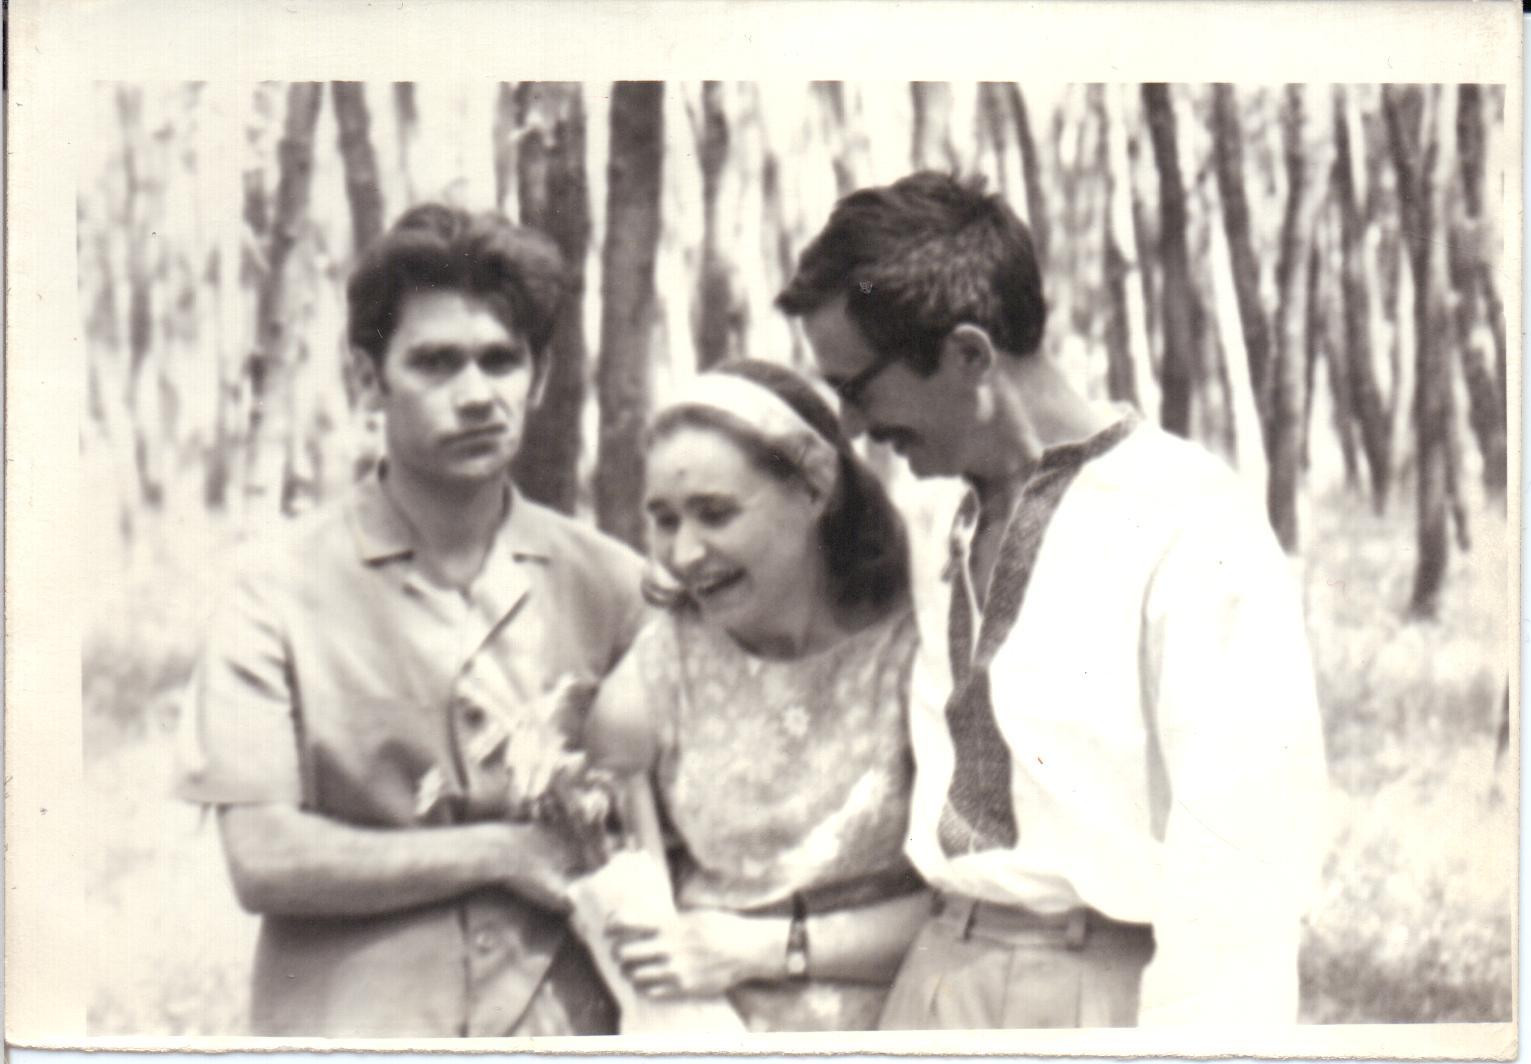 From left to right: Mykola Plakhotniuk, Nadia Svitlychna, Ivan Rusyn, 1960s